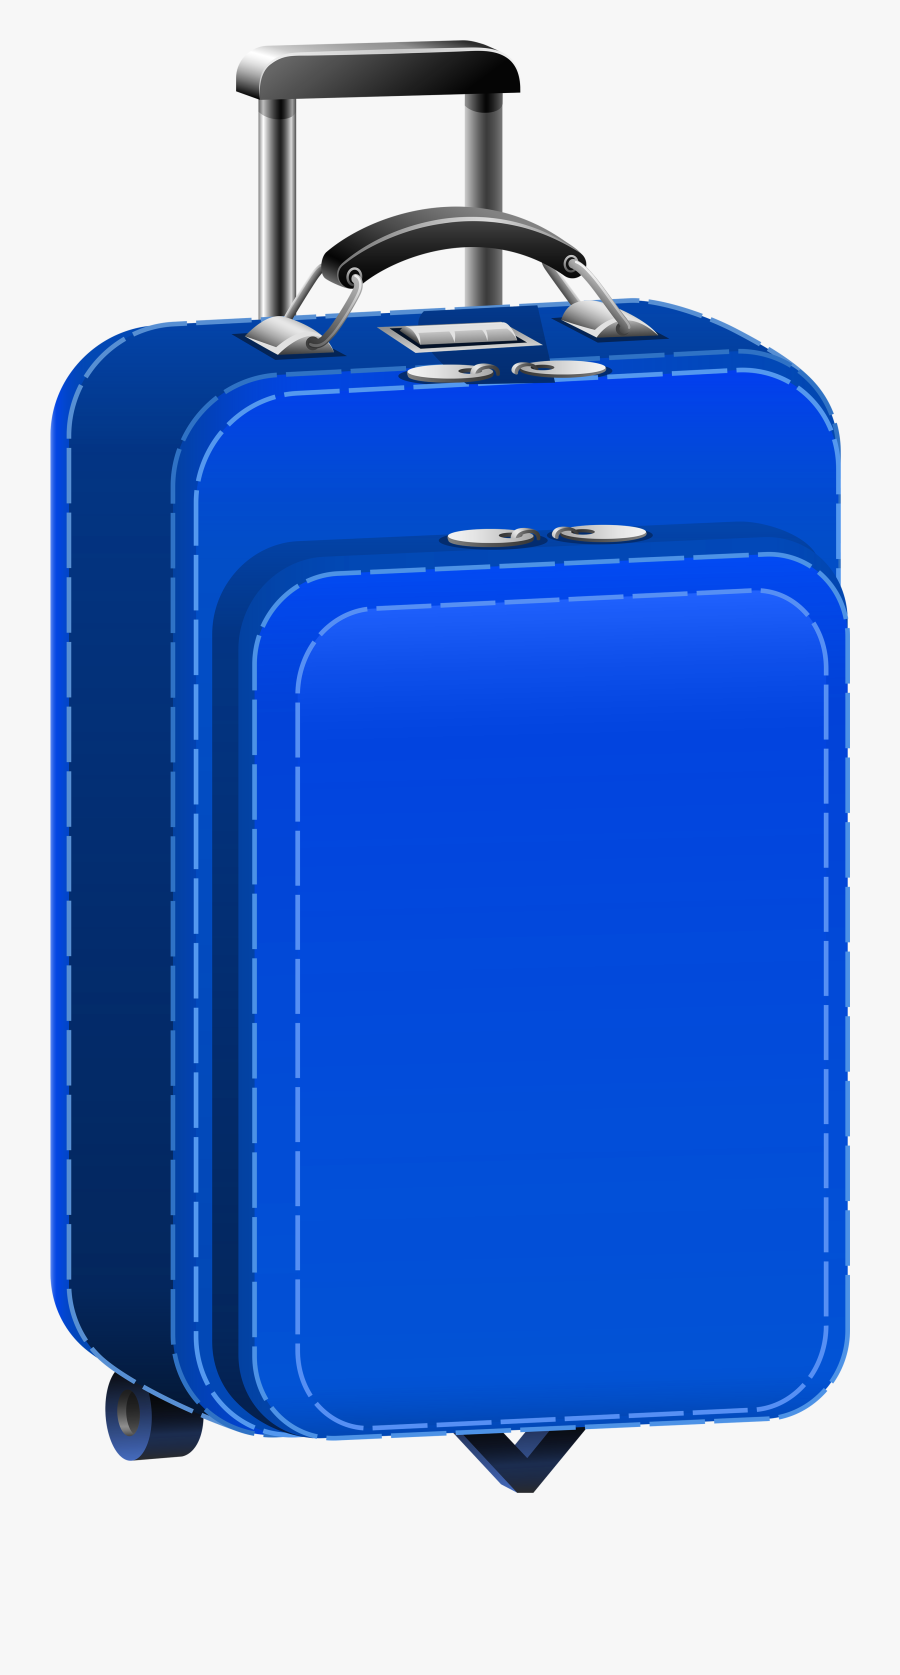 Blue Travel Bag Png Clipart Picture - Blue Travel Bag Png, Transparent Clipart